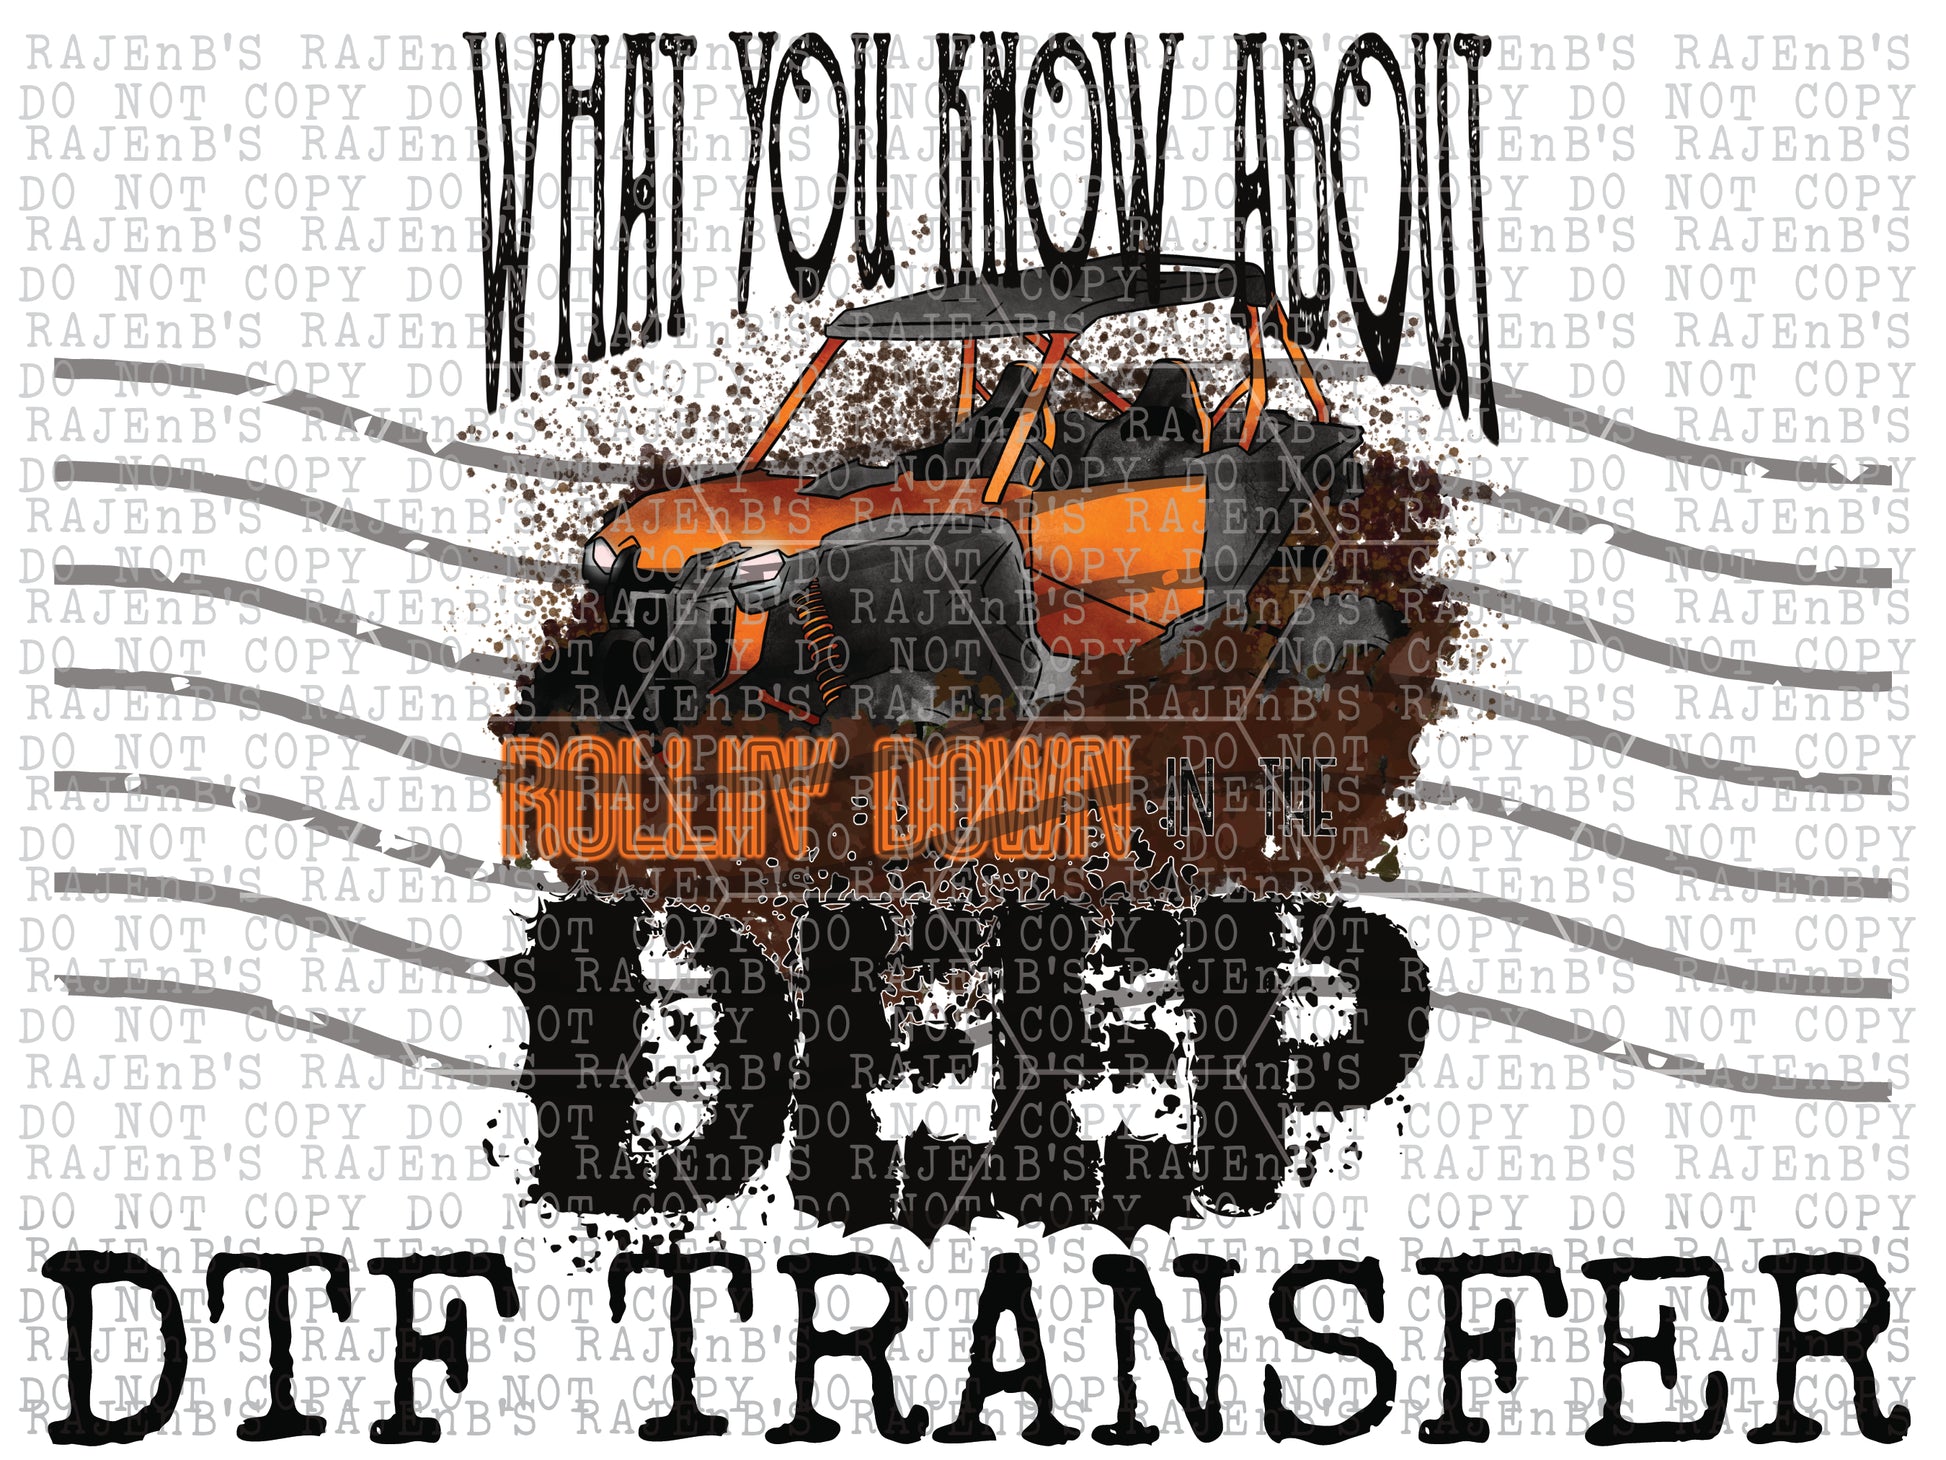 Talon Orange-Rolling Down in the Deep-SXS-ATV (DTF)  DTFCCC47 - RAJE 